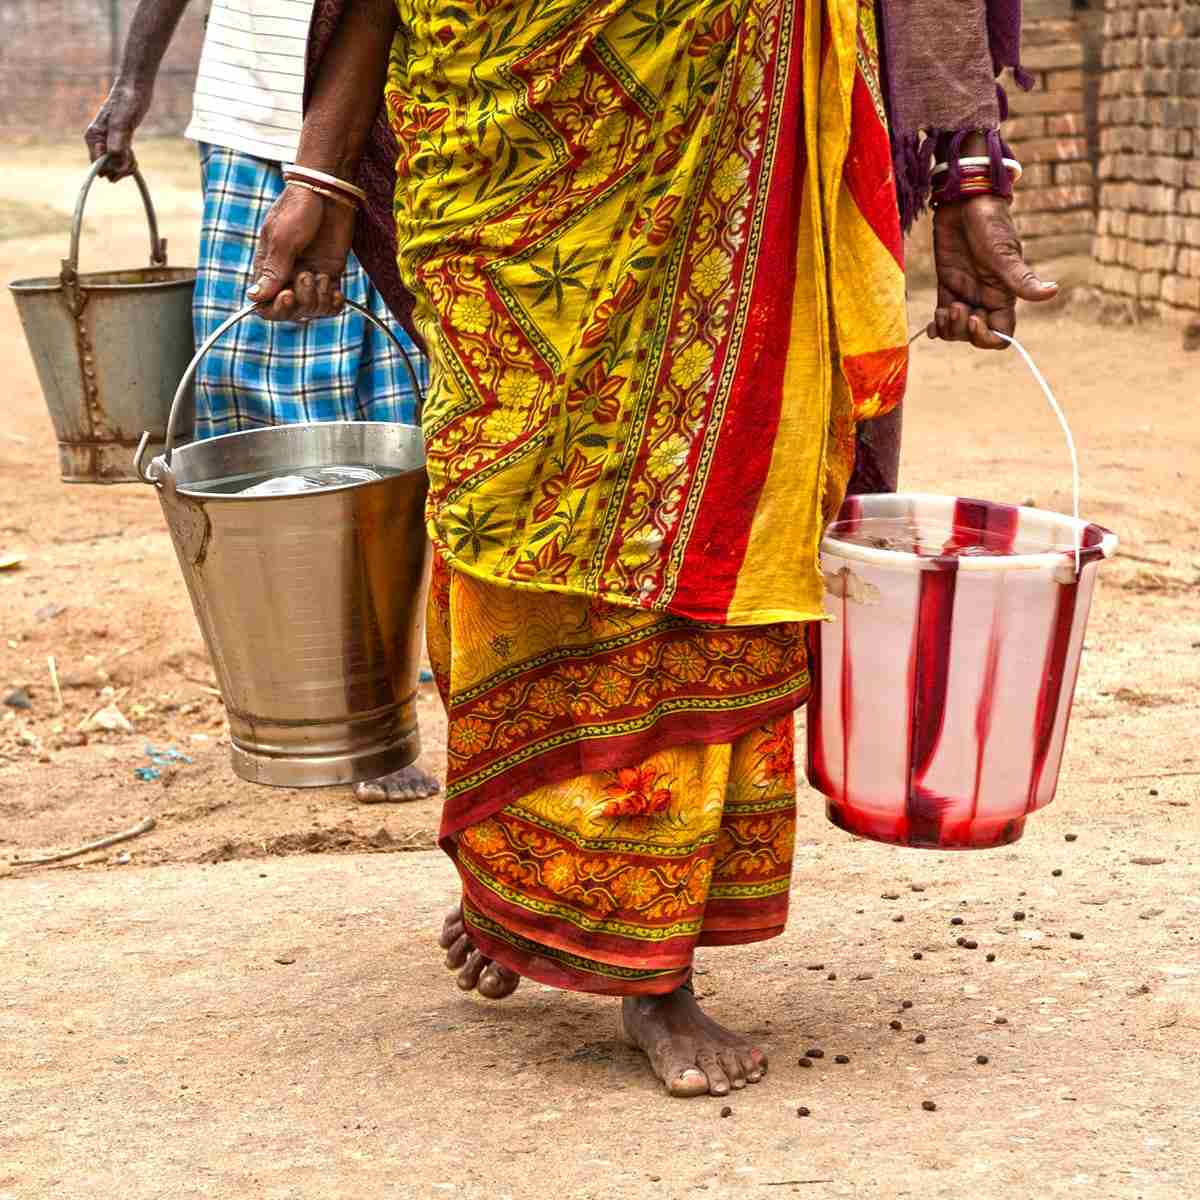 Woman walking carrying buckets of water